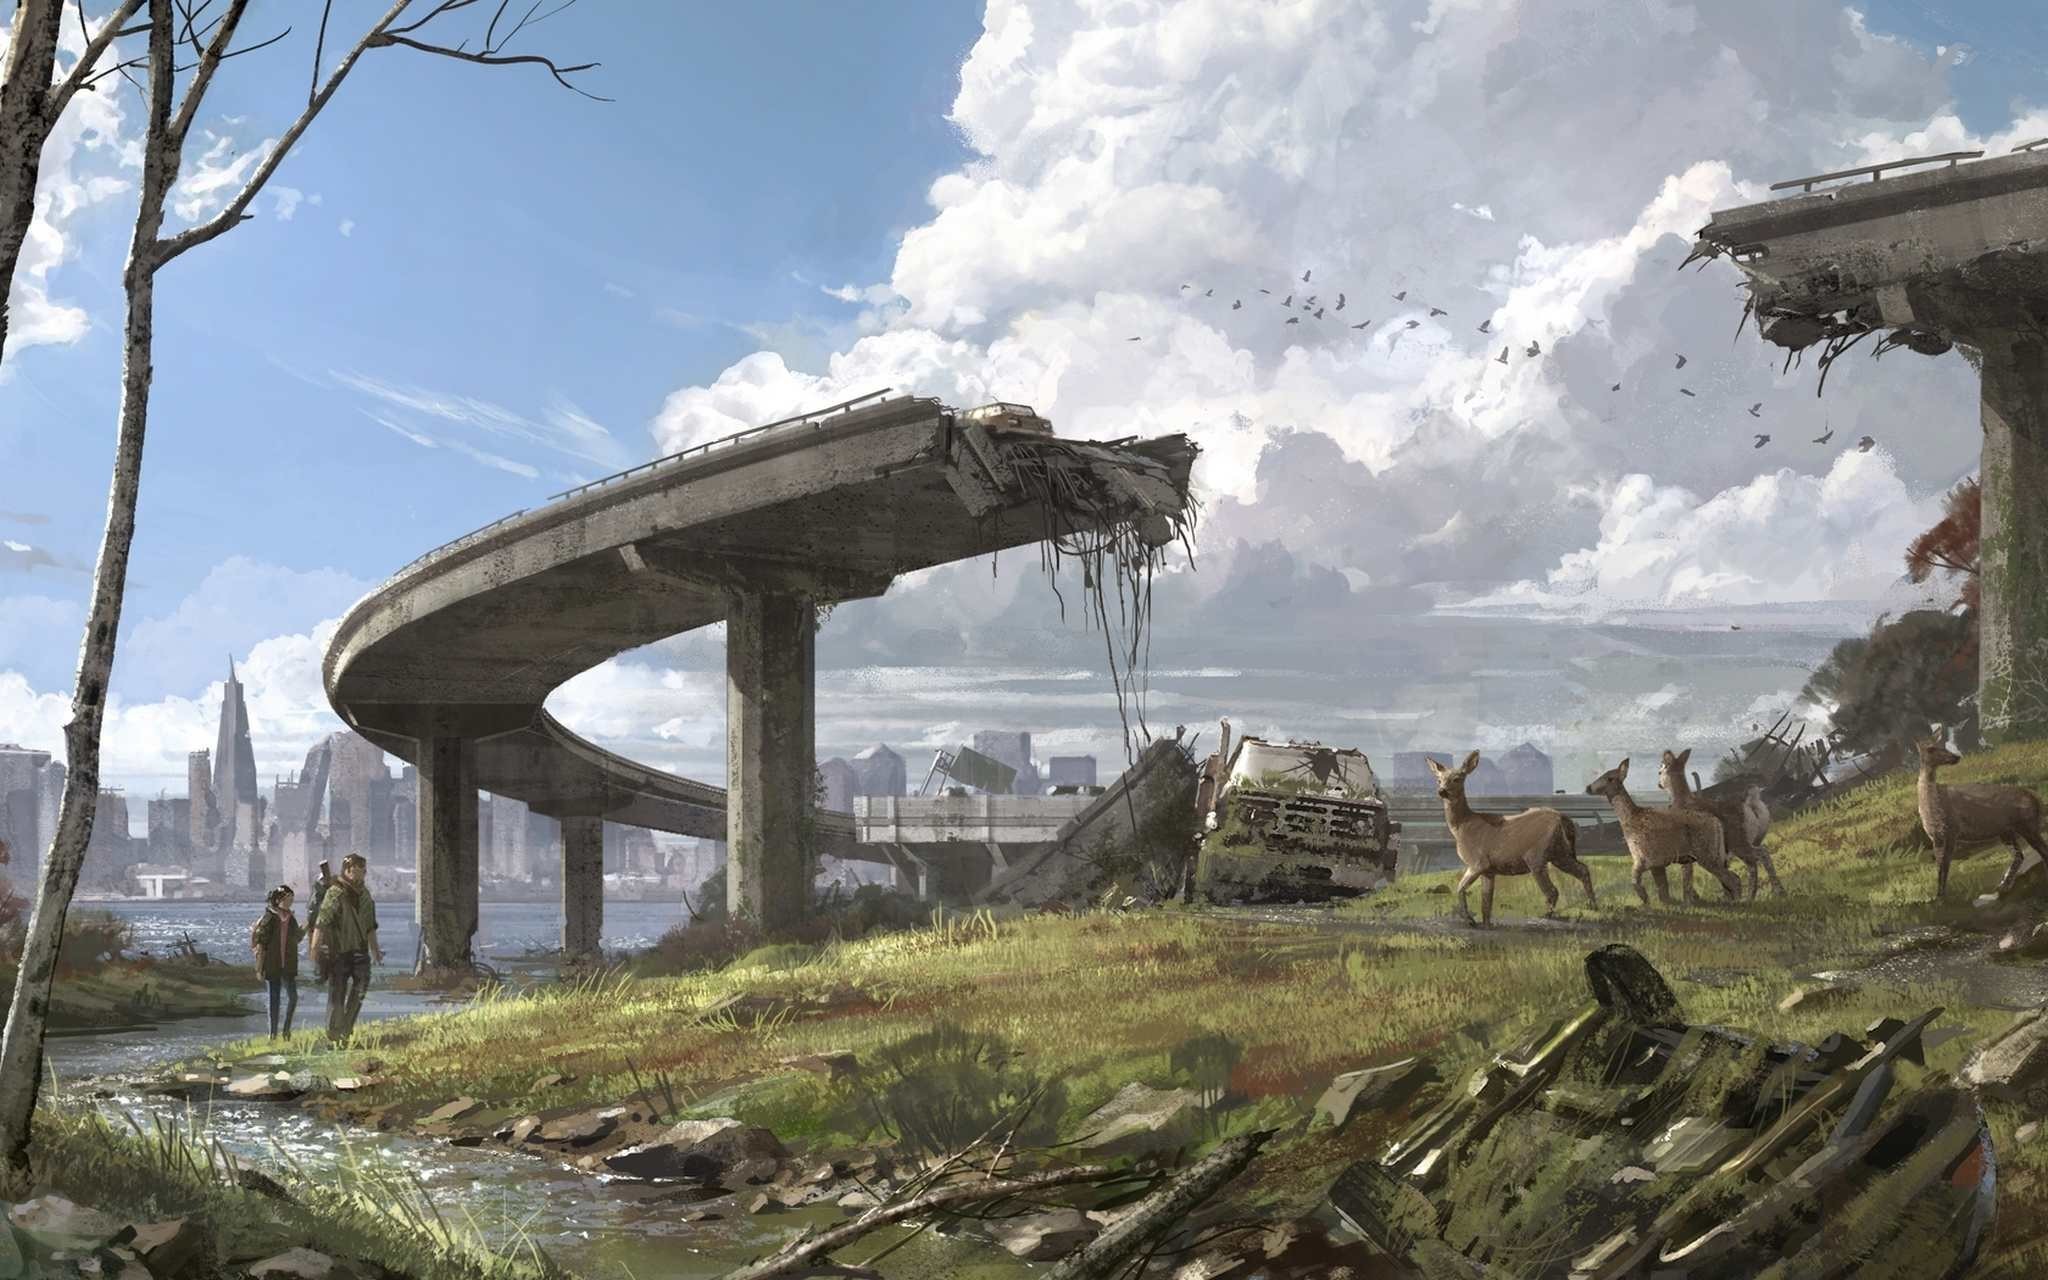 General 2048x1280 apocalyptic artwork futuristic ruins science fiction bridge deer animals sky clouds